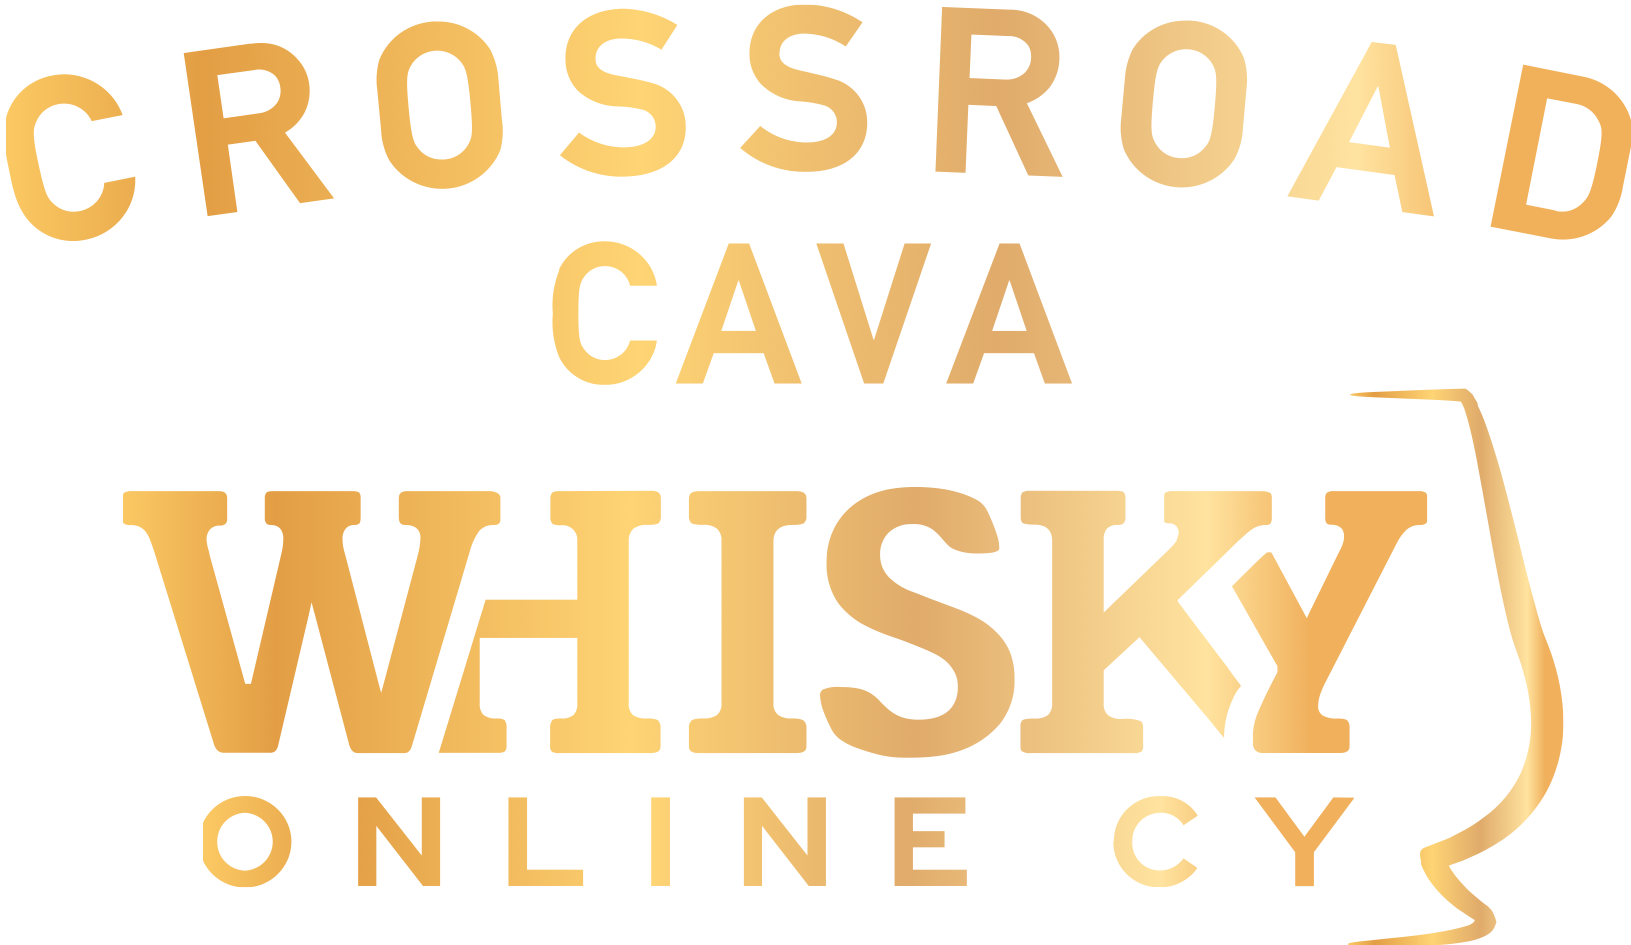 Whisky Online Cy by F&S Kiosk Company Ltd (Crossroad Cava)